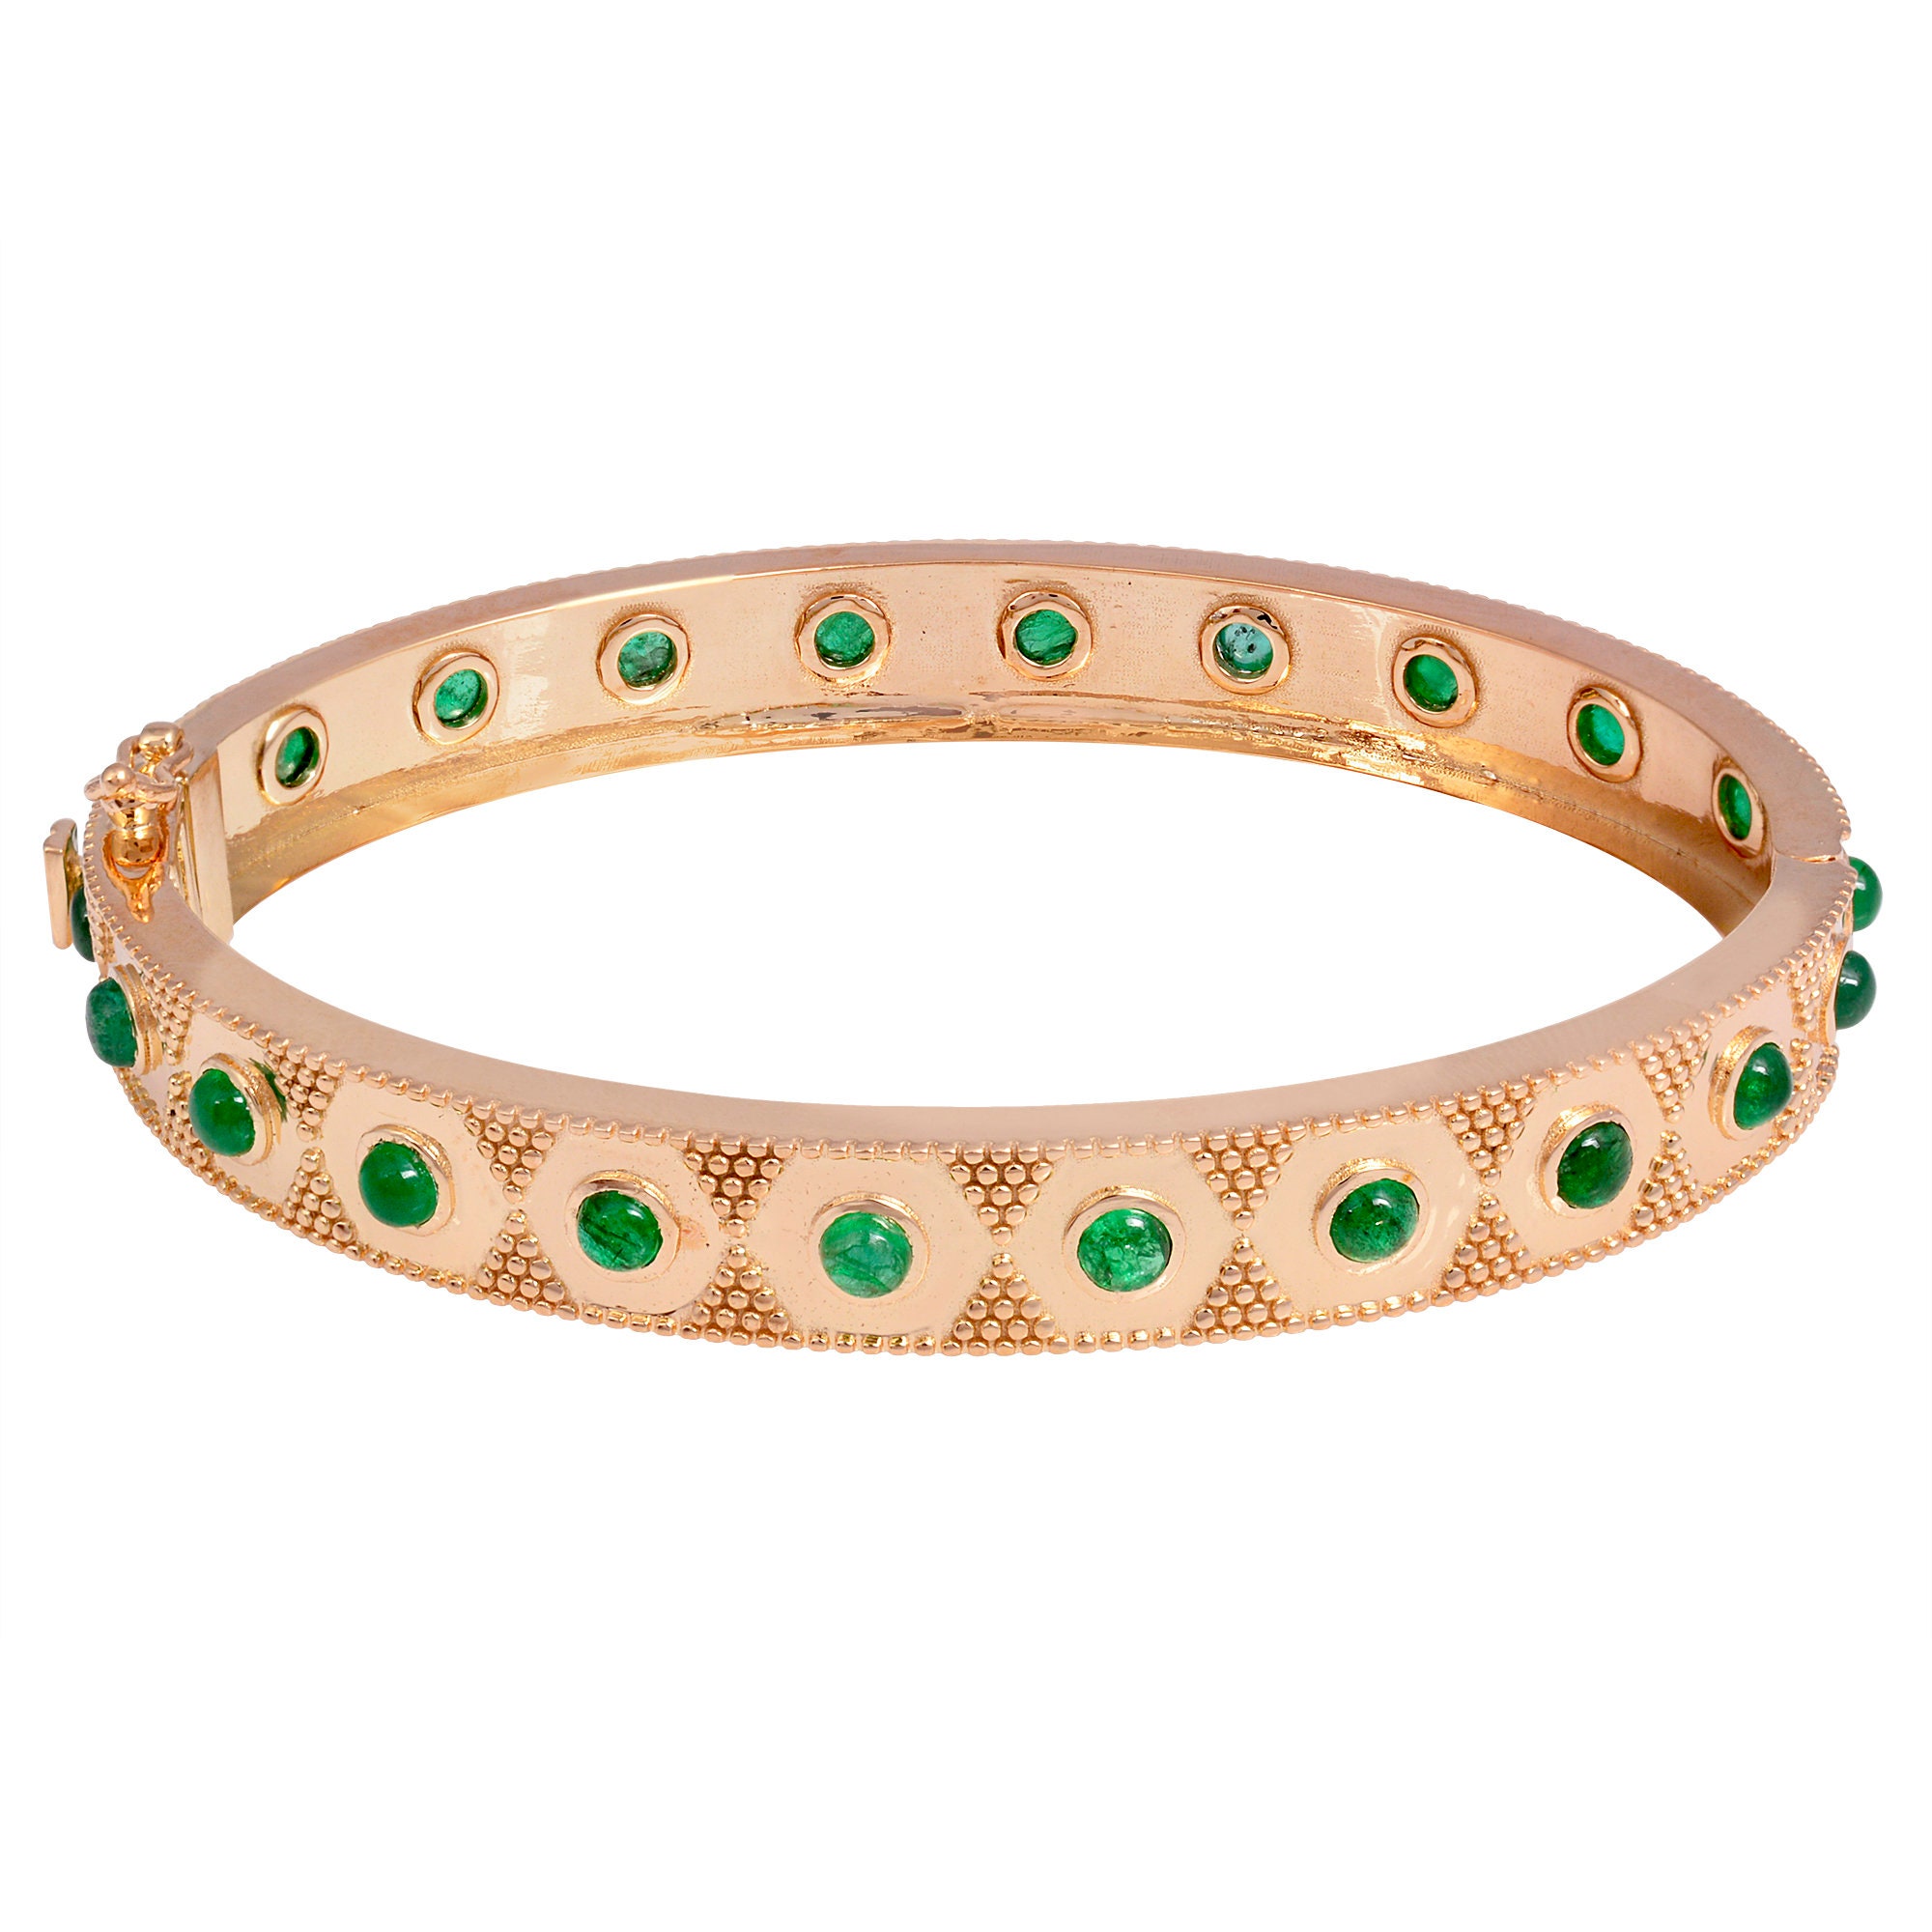 On Sale Zambian Emerald Bangle in 14K Rose Gold, Genuine 3.10 Ct. Gemstone Wedding Bracelet Handmade Jewelry Mother's Day Gift